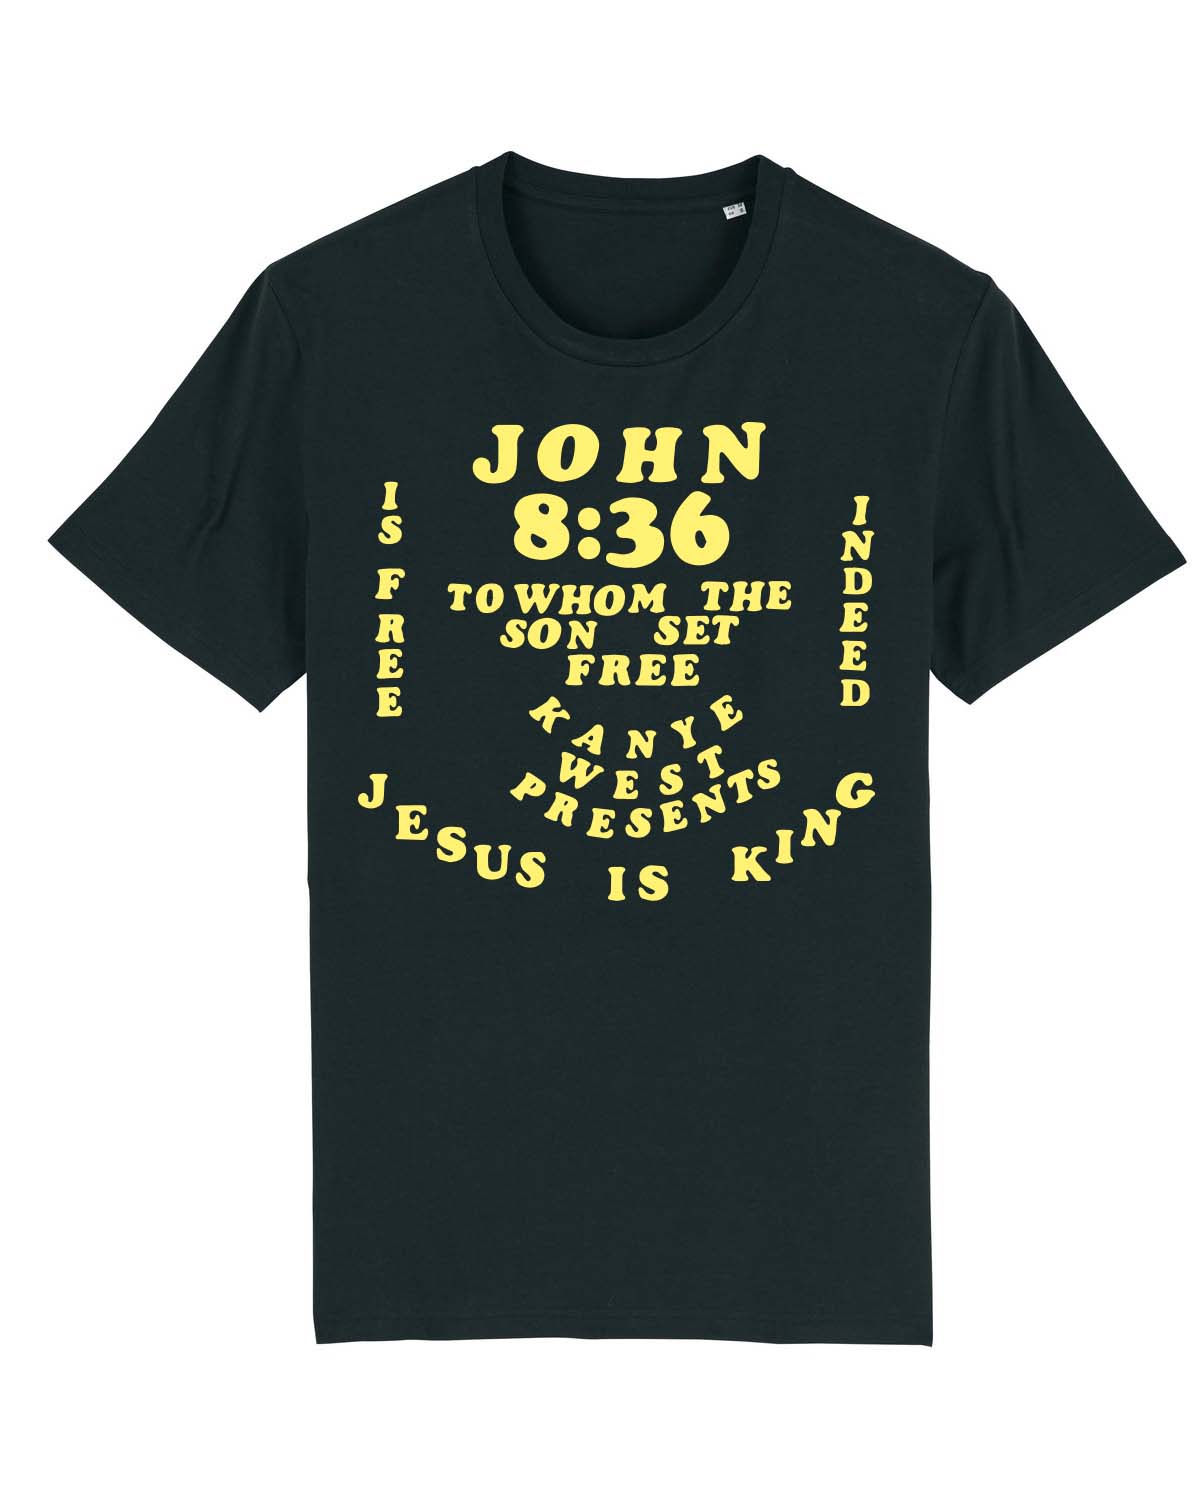 T shirt John is free 8:36 Black